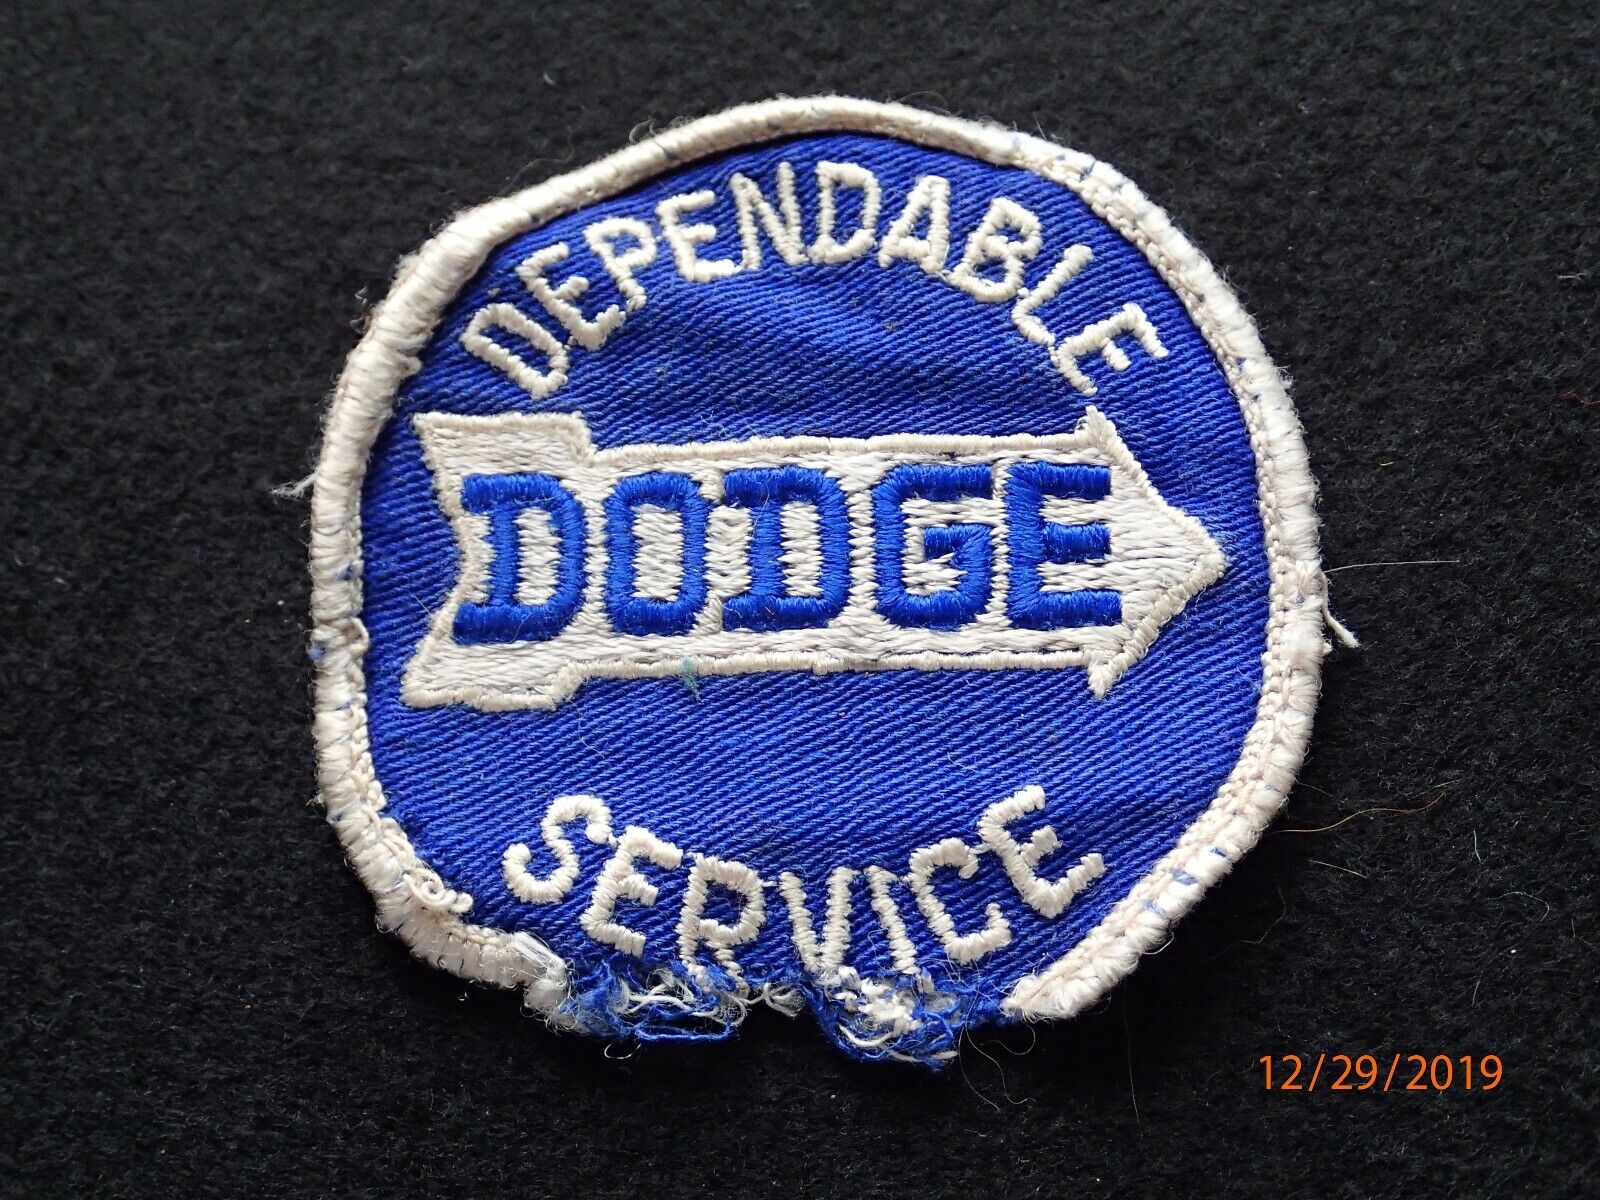 Vintage Dependable Dodge Service Jacket Patch 1960s Classic Original Mfg Damaged